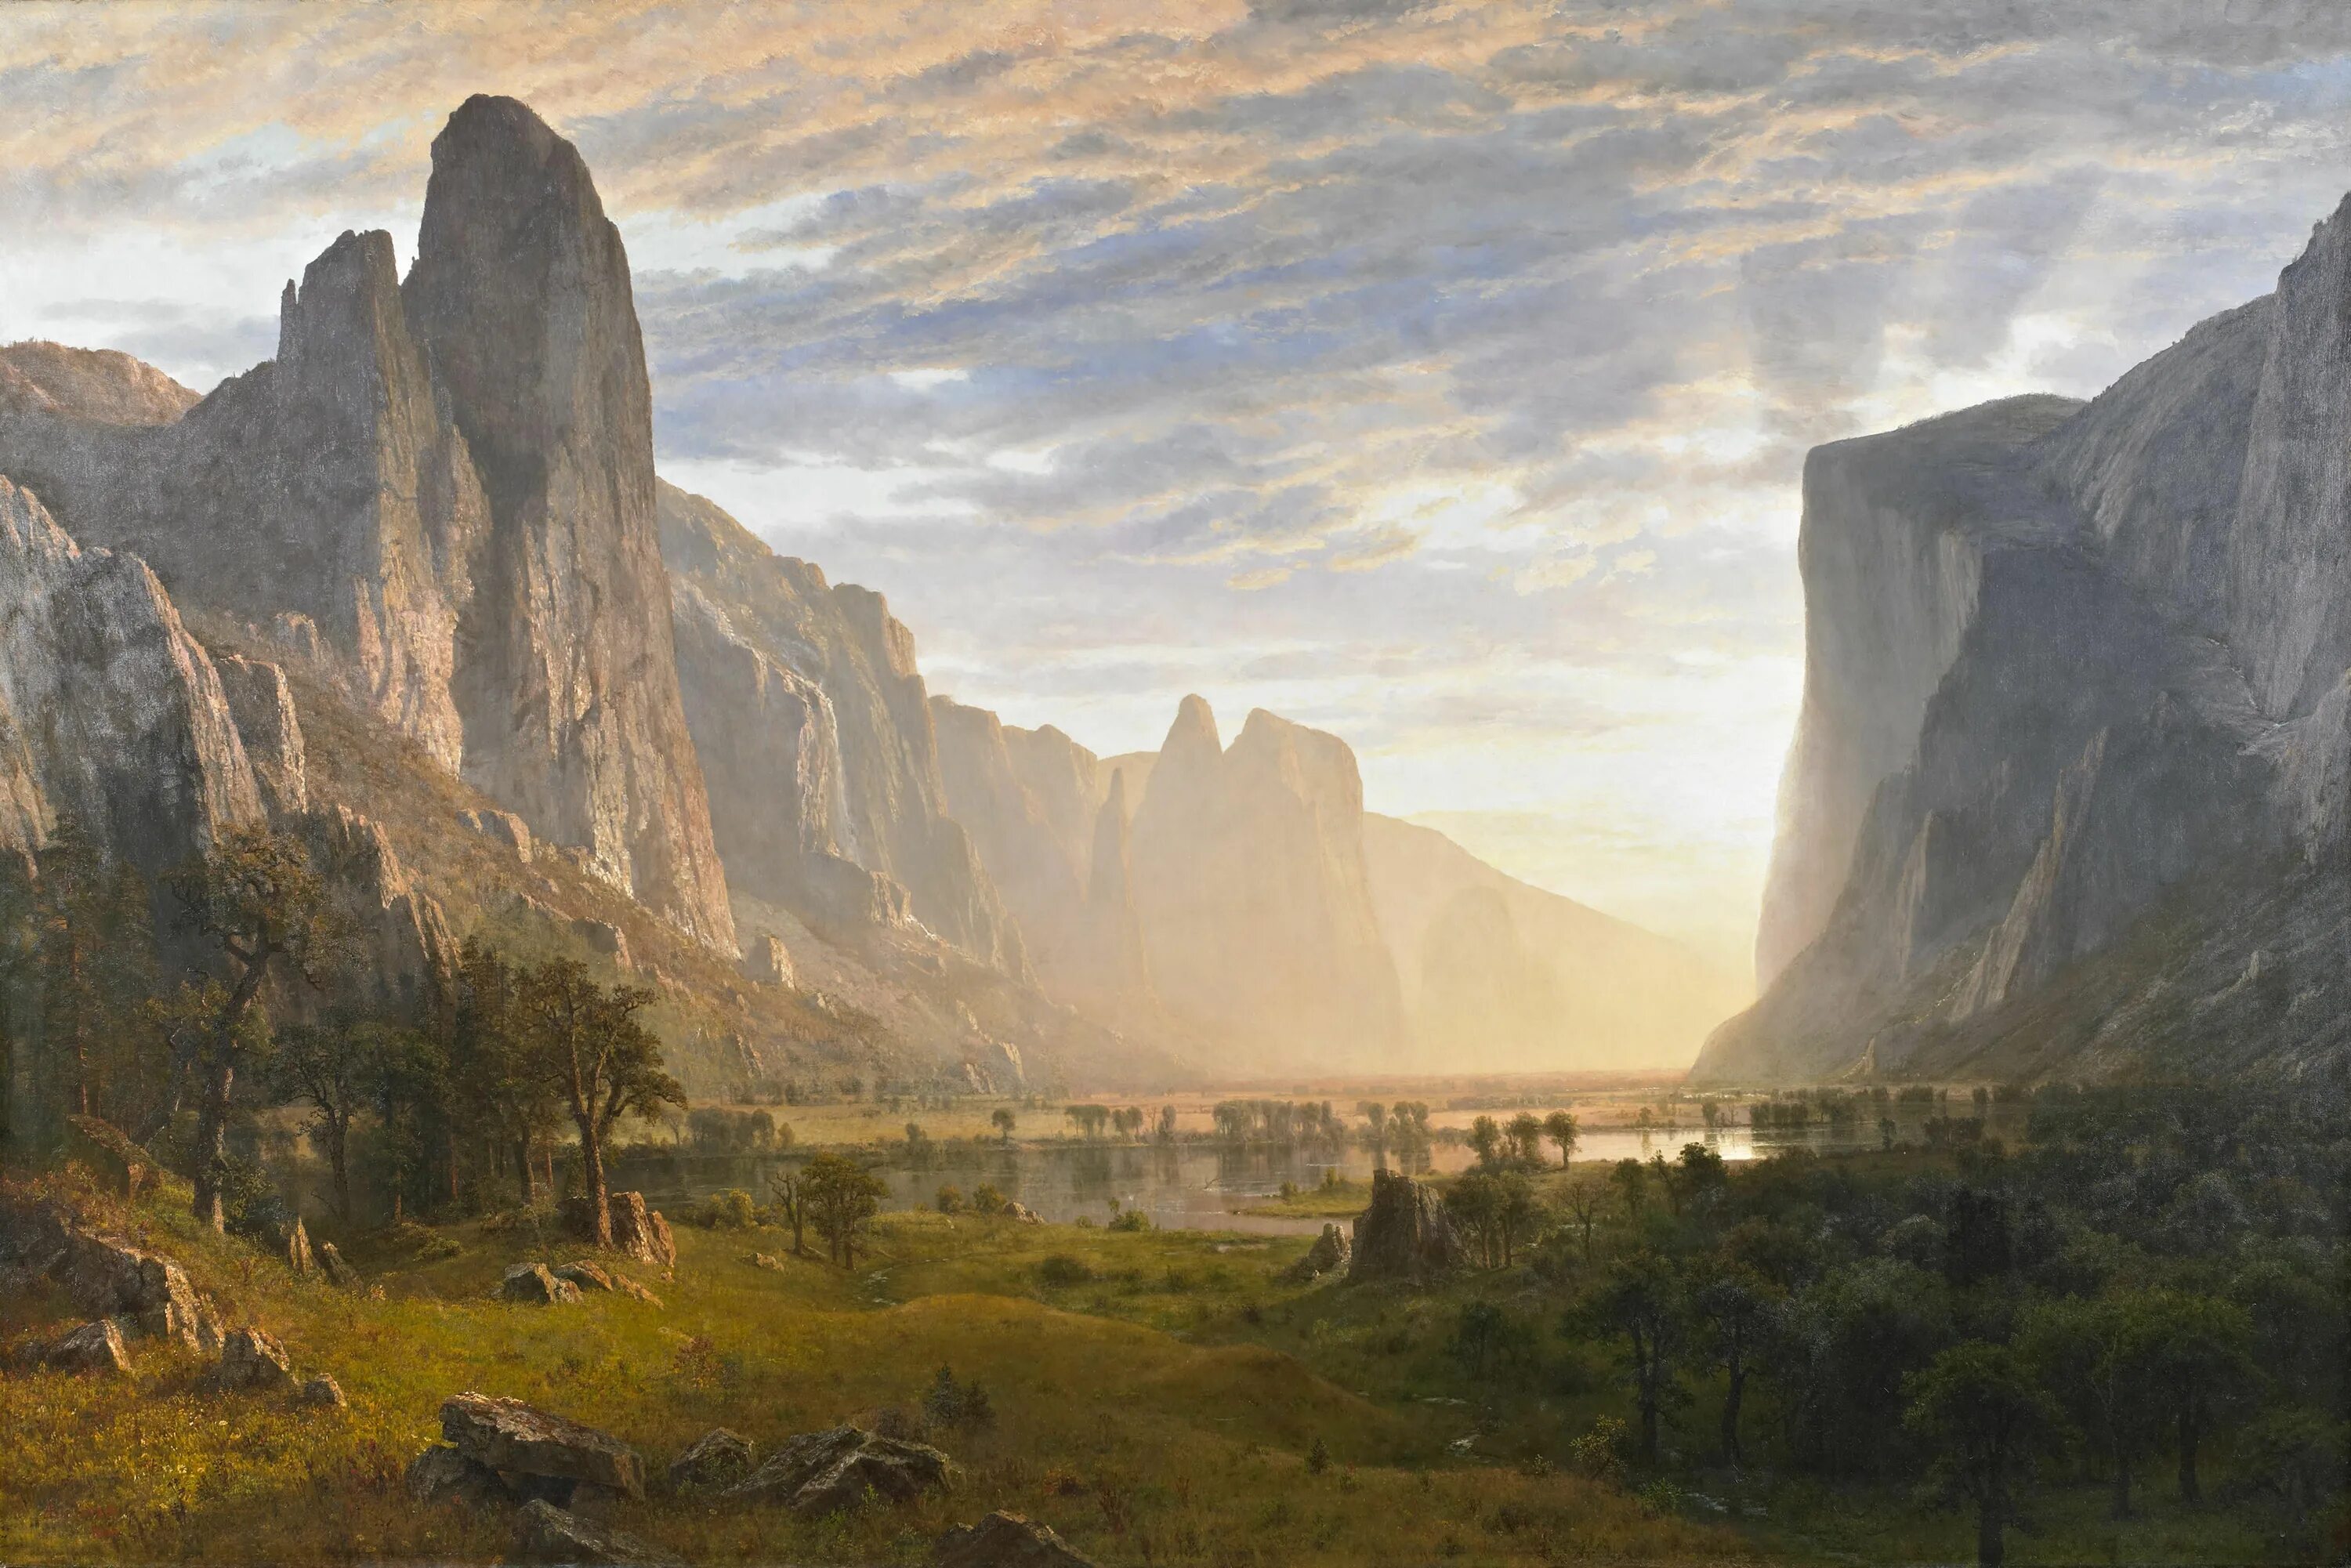 Painted landscape. Альберт Бирштадт Долина Йосемити. Американский художник пейзажист Альберт Бирштадт. Горные пейзажи Альберта Бирштадта. Альберт Бирштадт (Albert Bierstadt; 1830-1902).